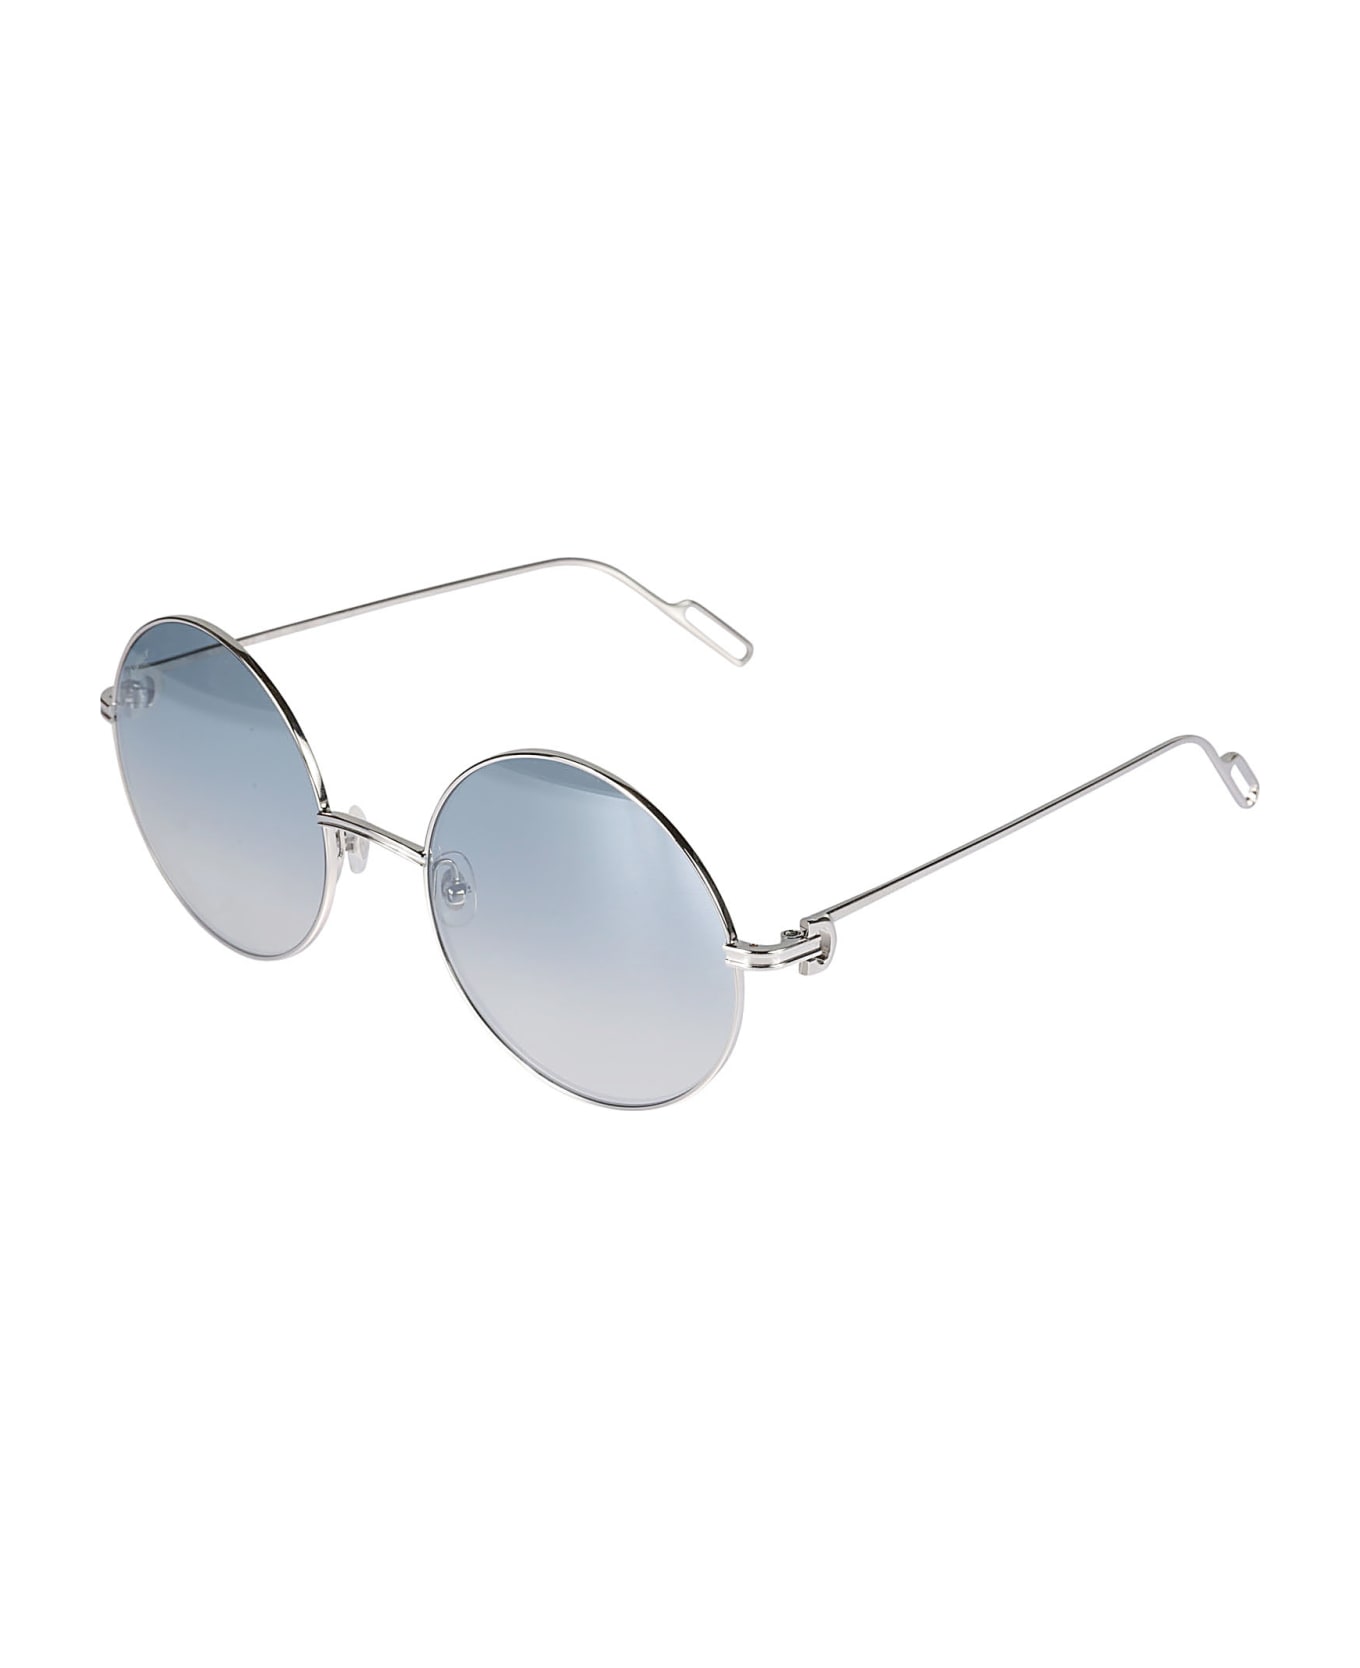 Cartier Eyewear Premiere De Cartier Sunglasses - 006 silver silver blue サングラス